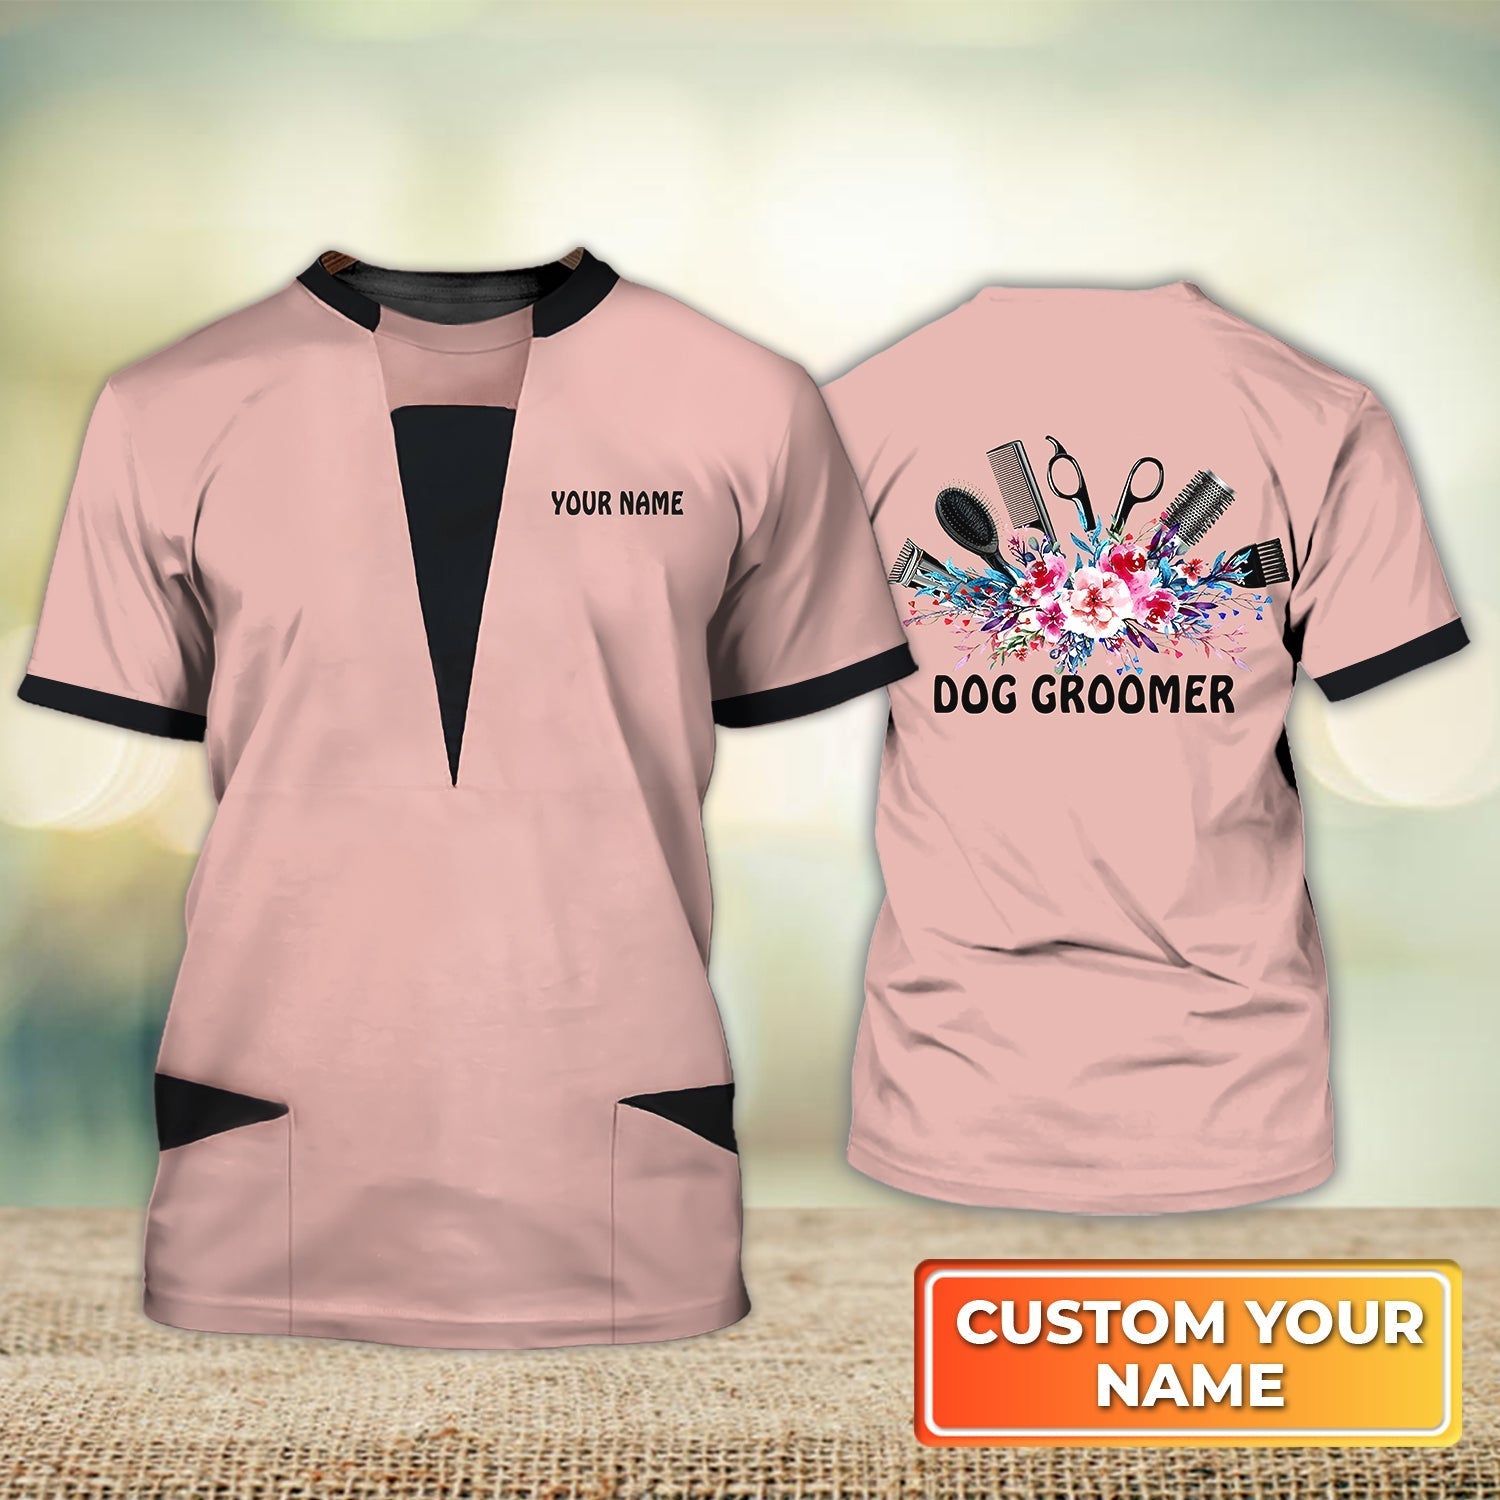 Customized Groomer Shirt Men Women Dog Groomer Pet Groomer Uniform Pink And Black Salon